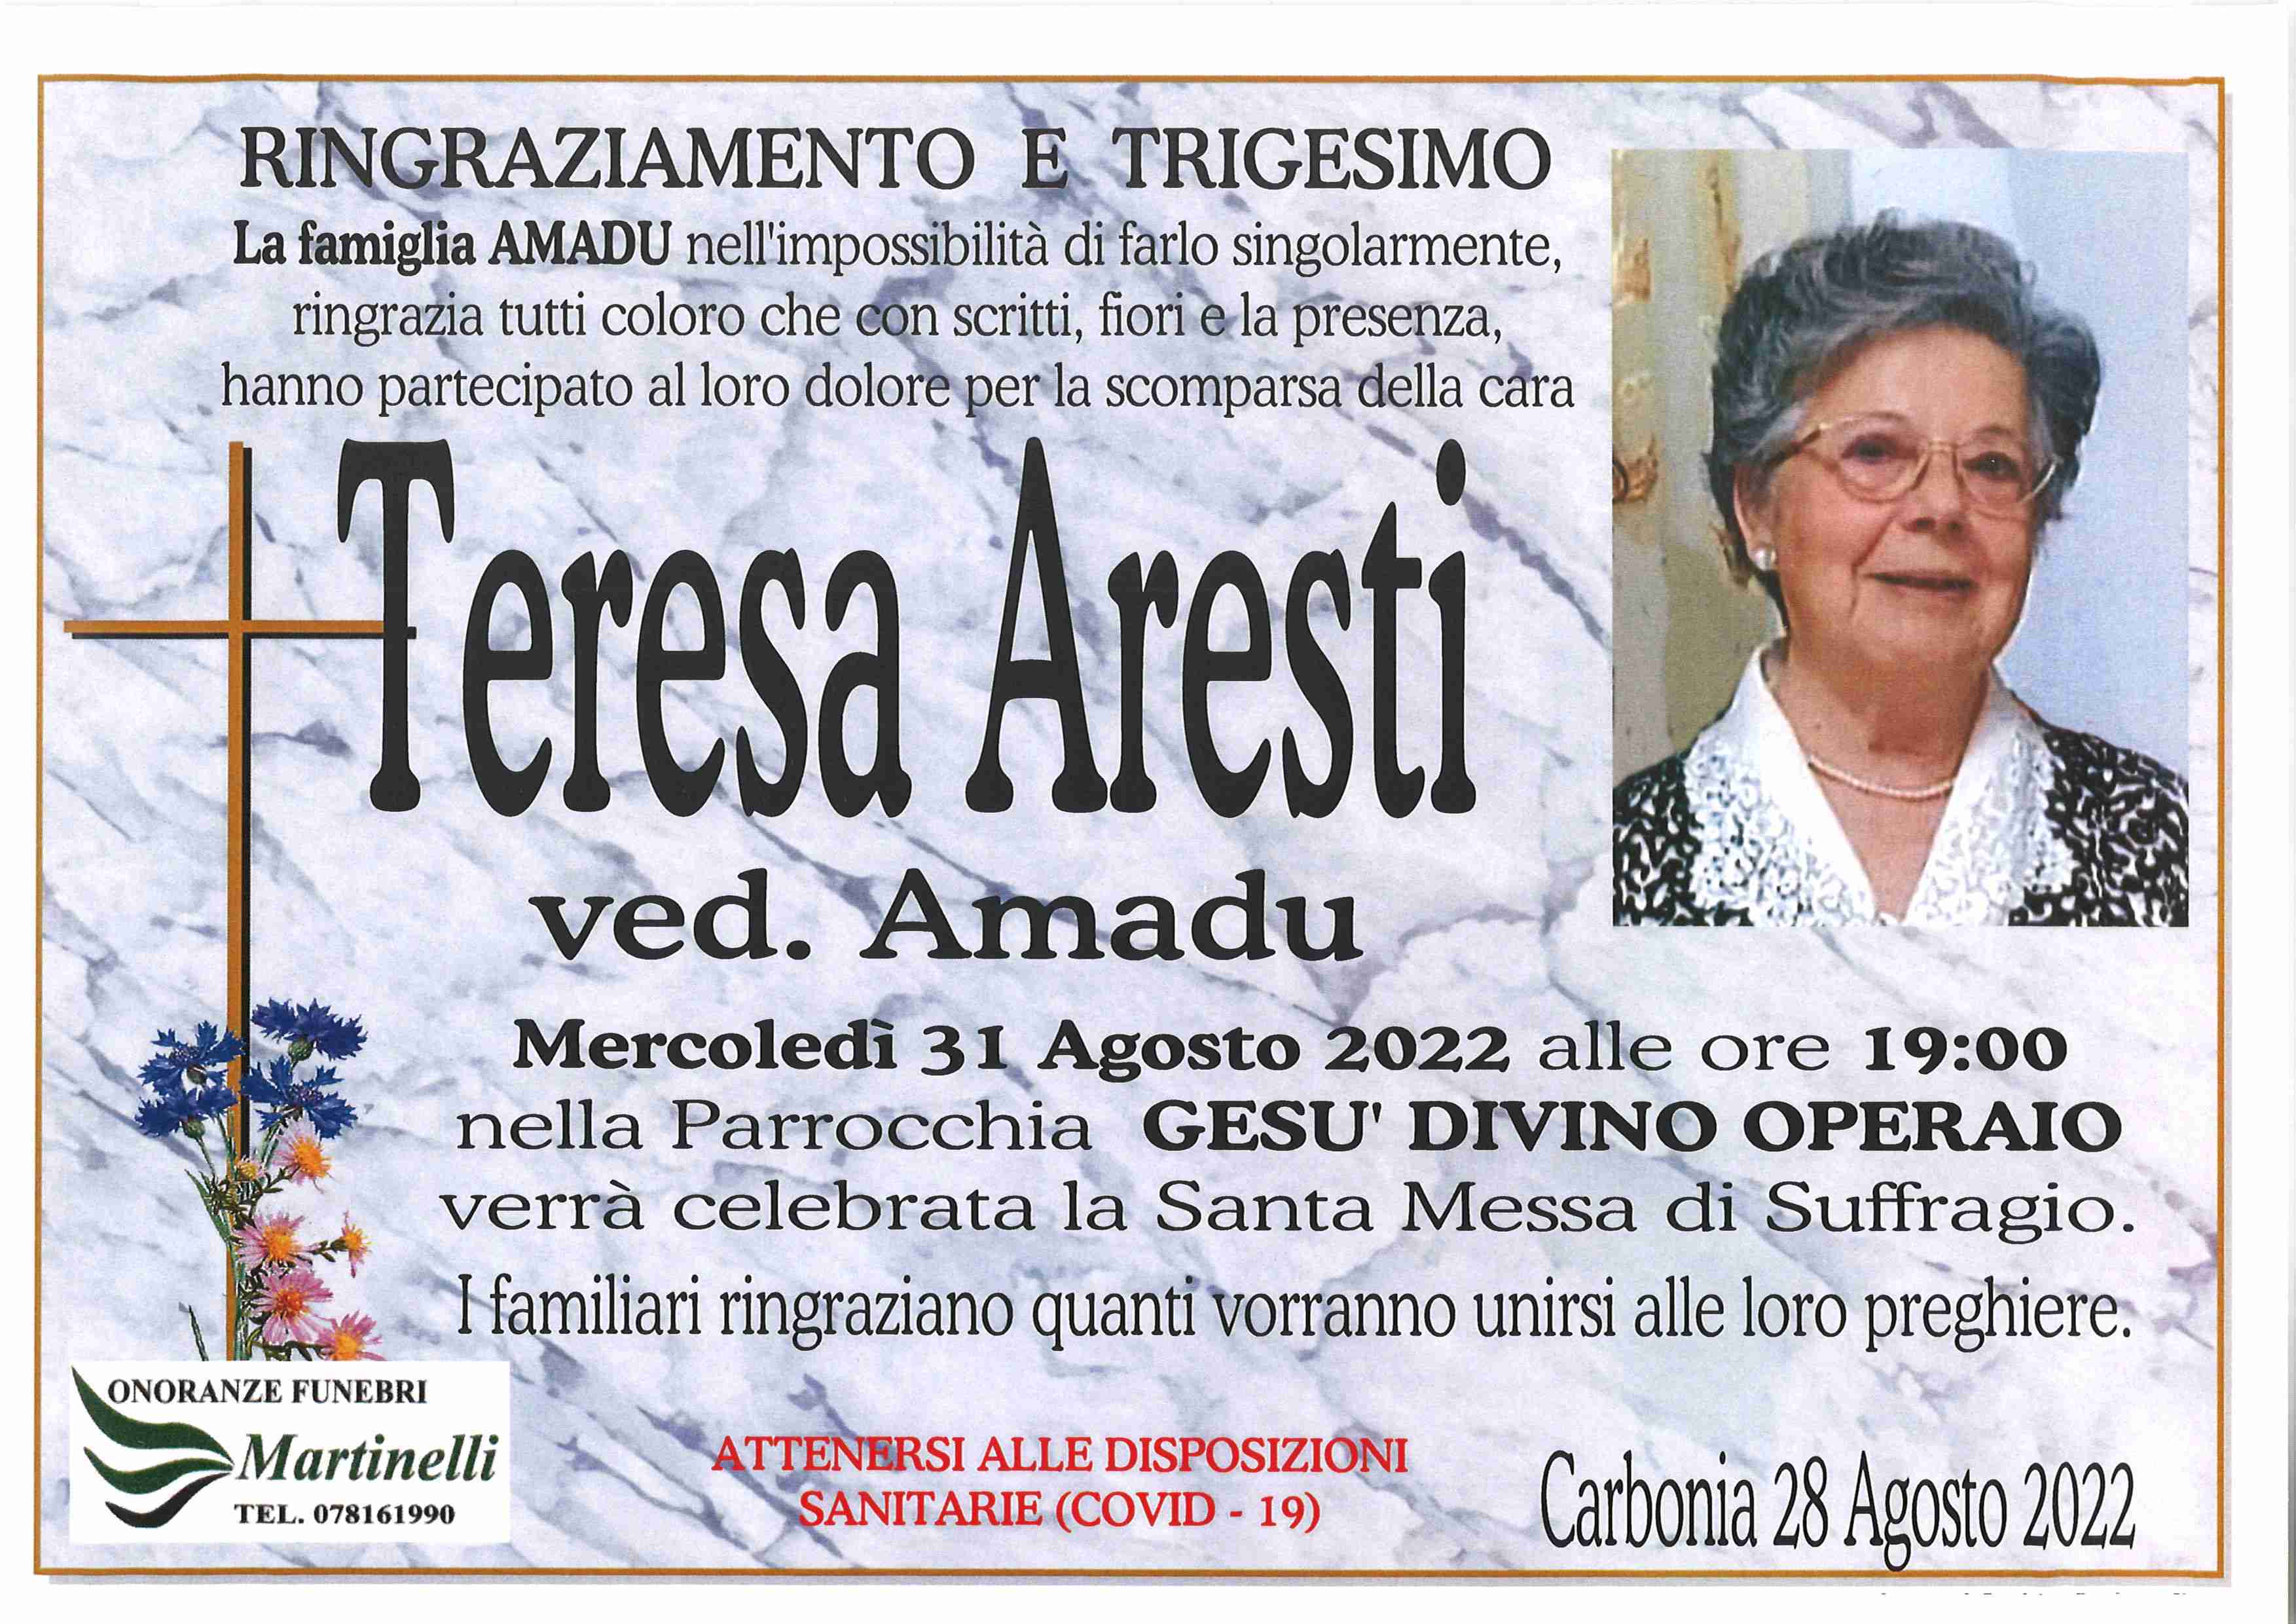 Maria Teresa Aresti